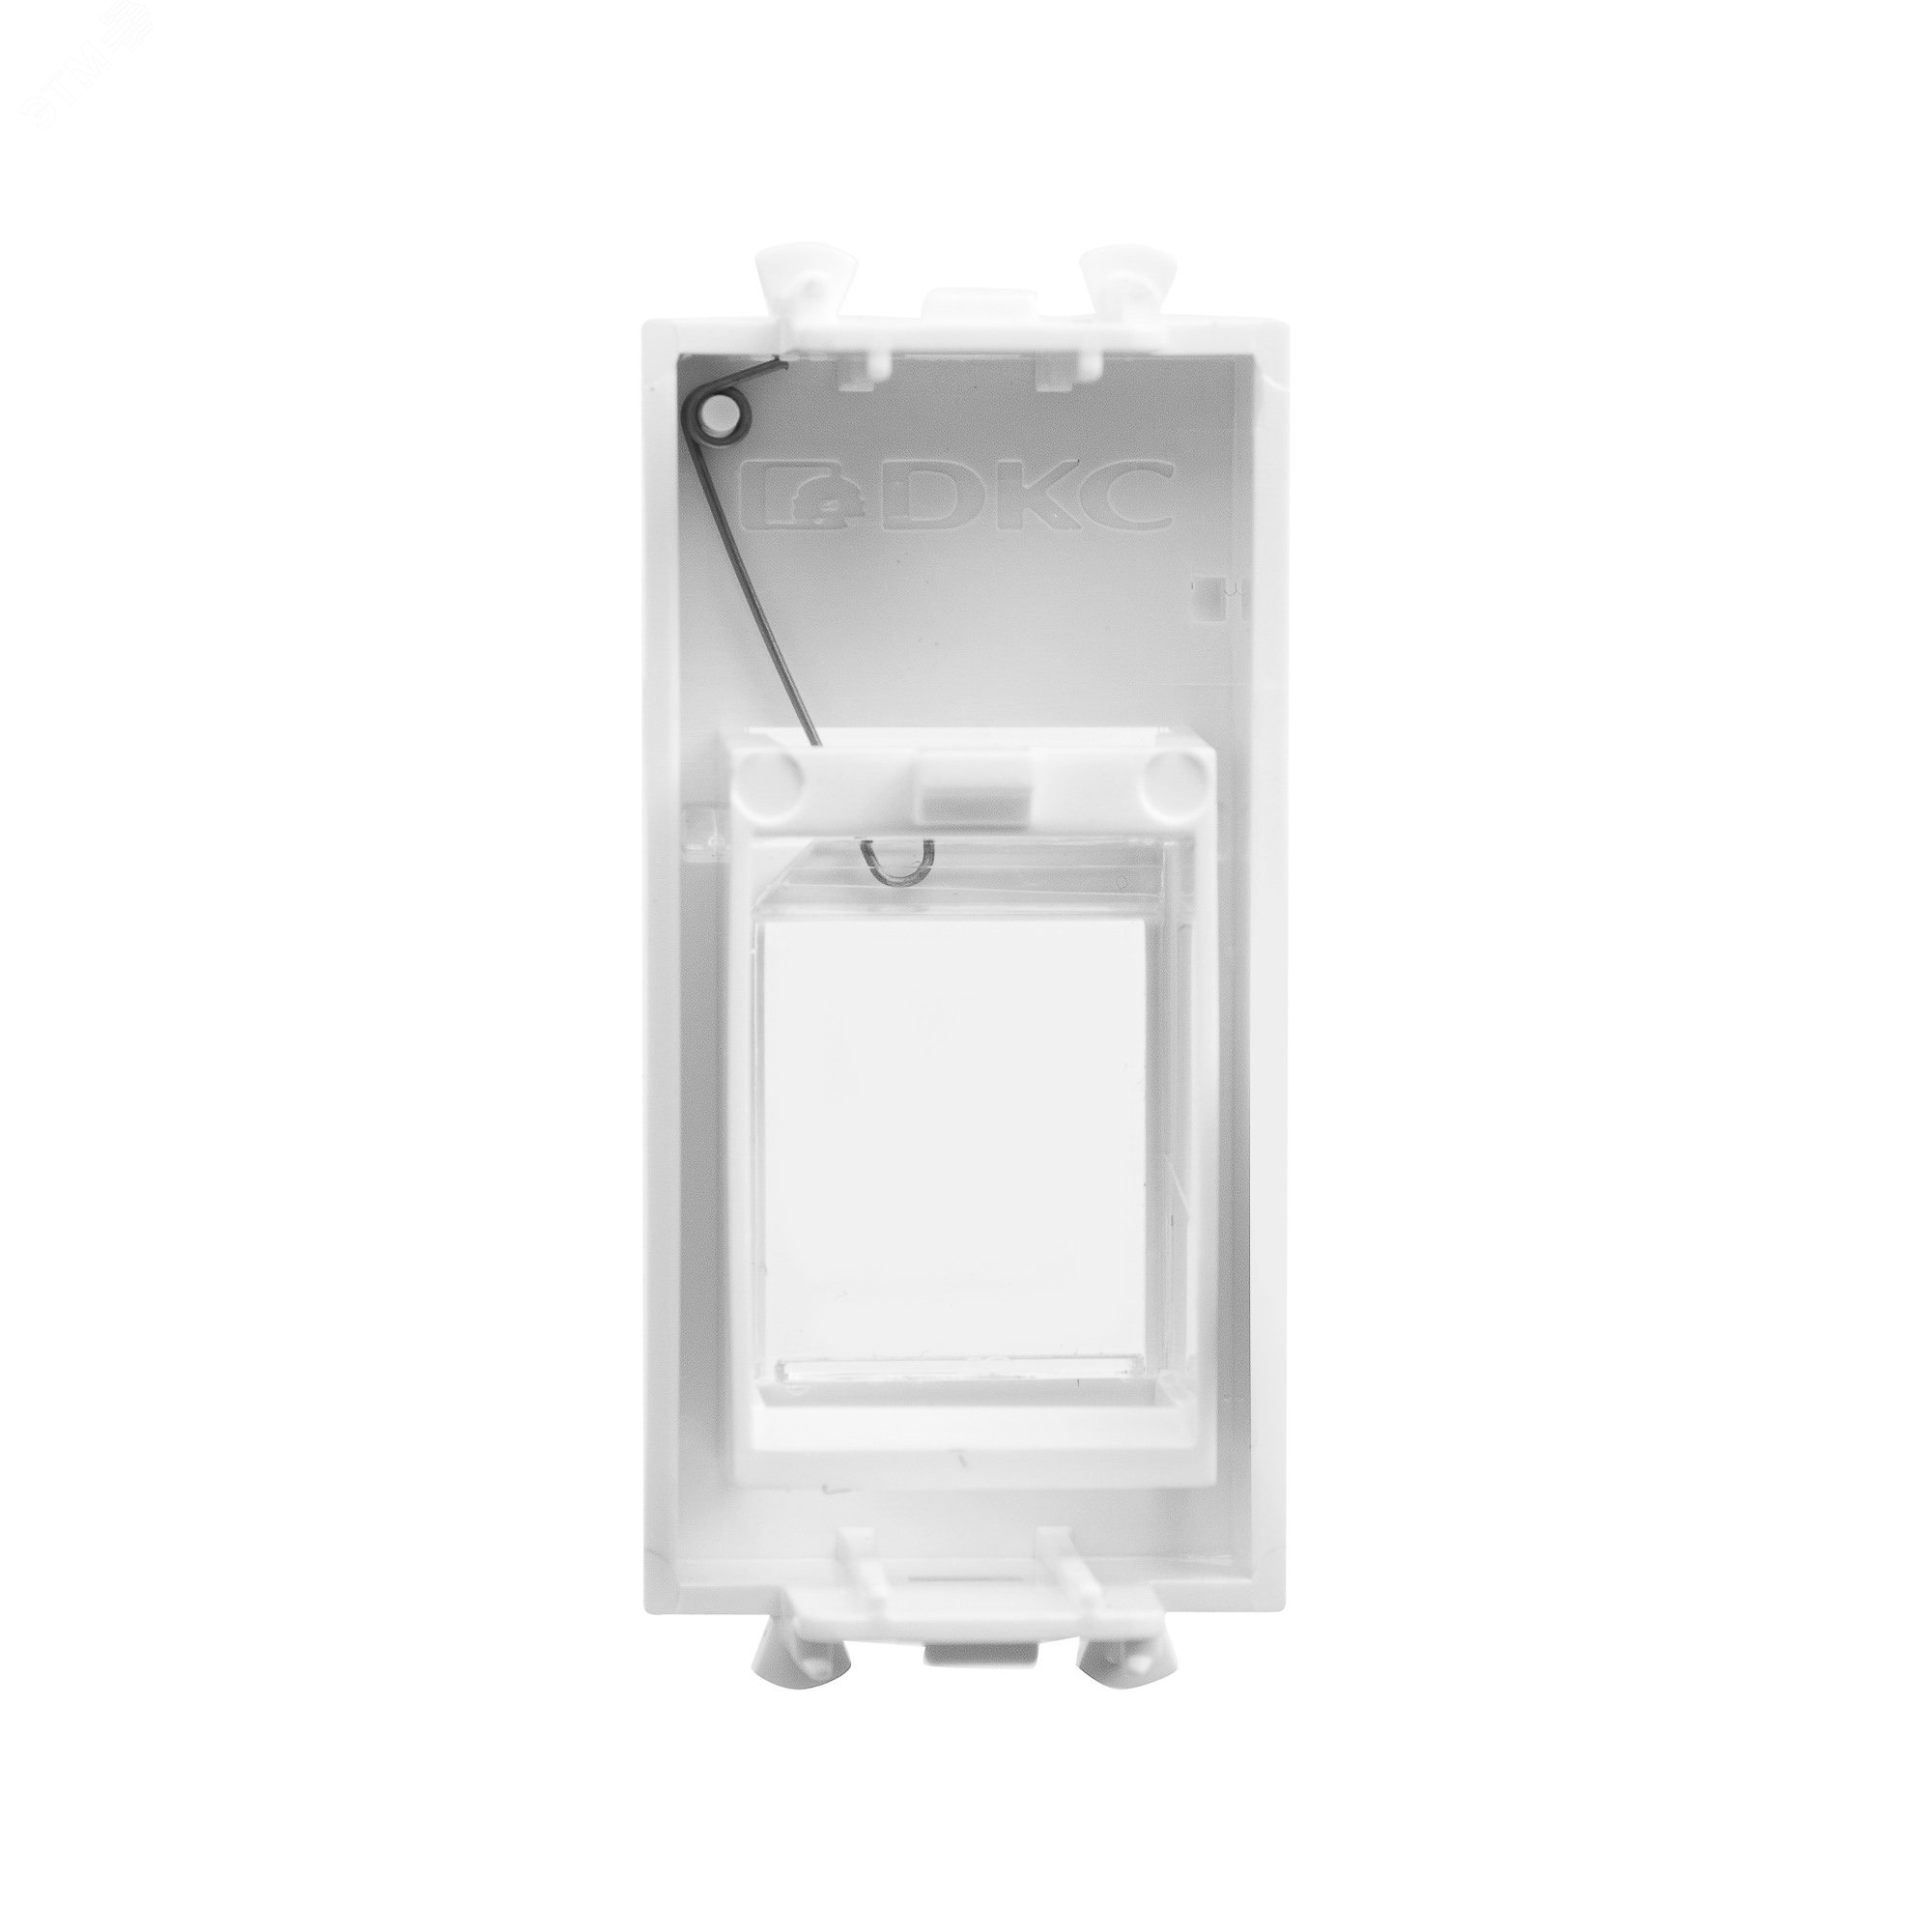 Avanti Адаптер для Keystone ''Белое облако'' 1 модульный 4400201 DKC - превью 4